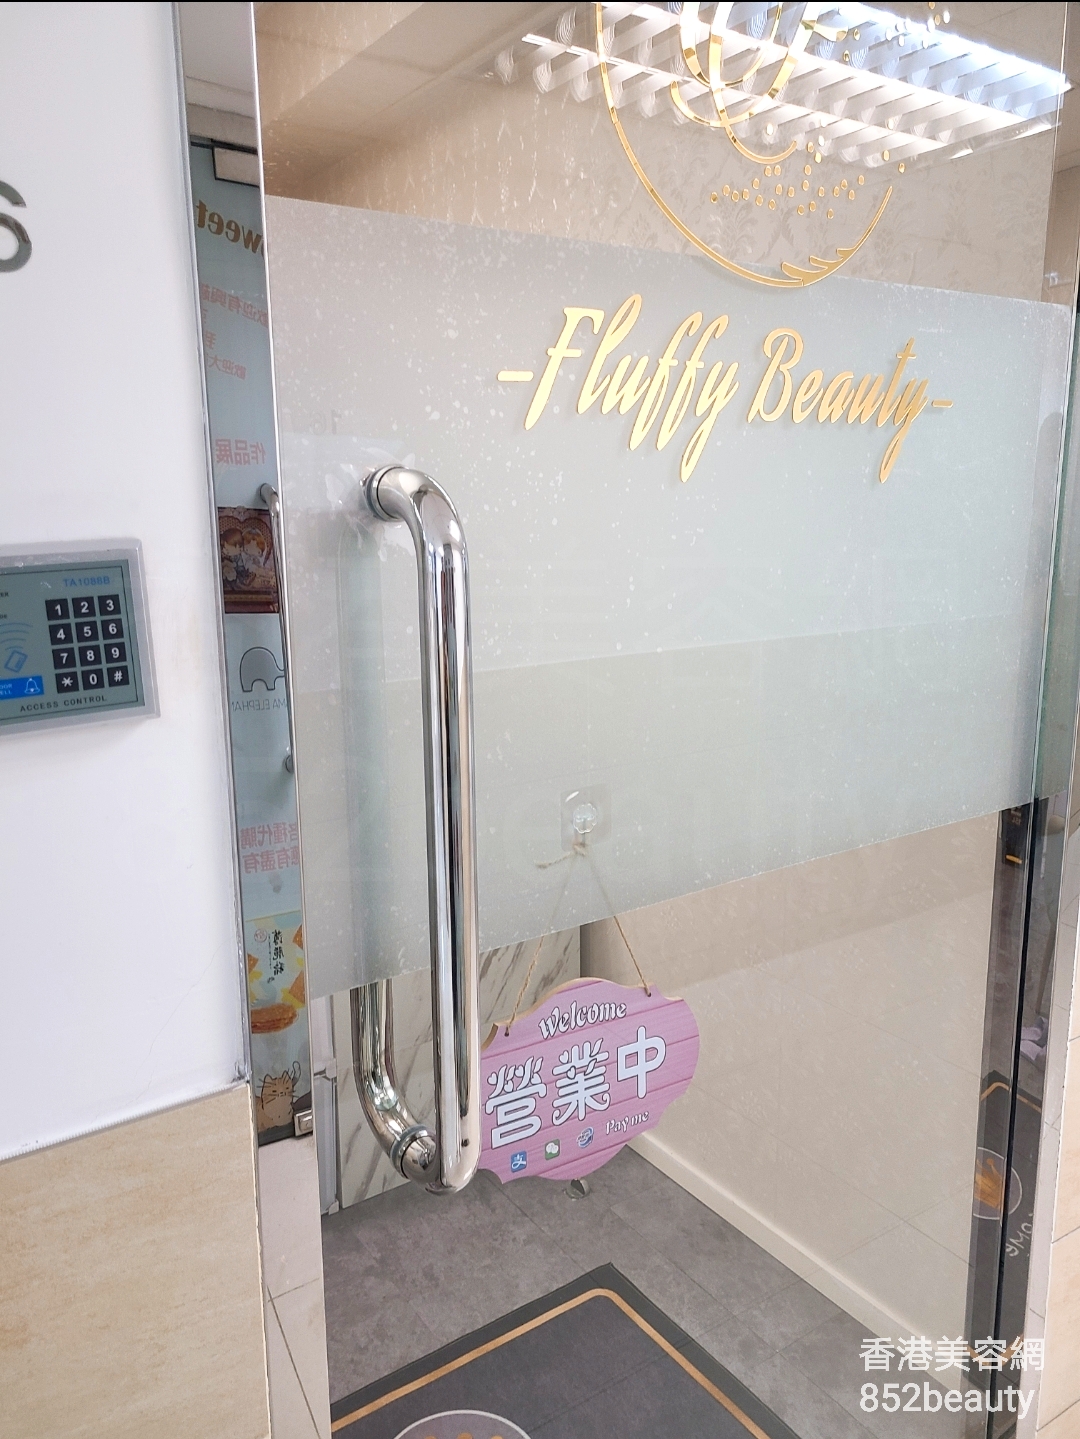 香港美容網 Hong Kong Beauty Salon 美容院 / 美容師: Fluffy Beauty